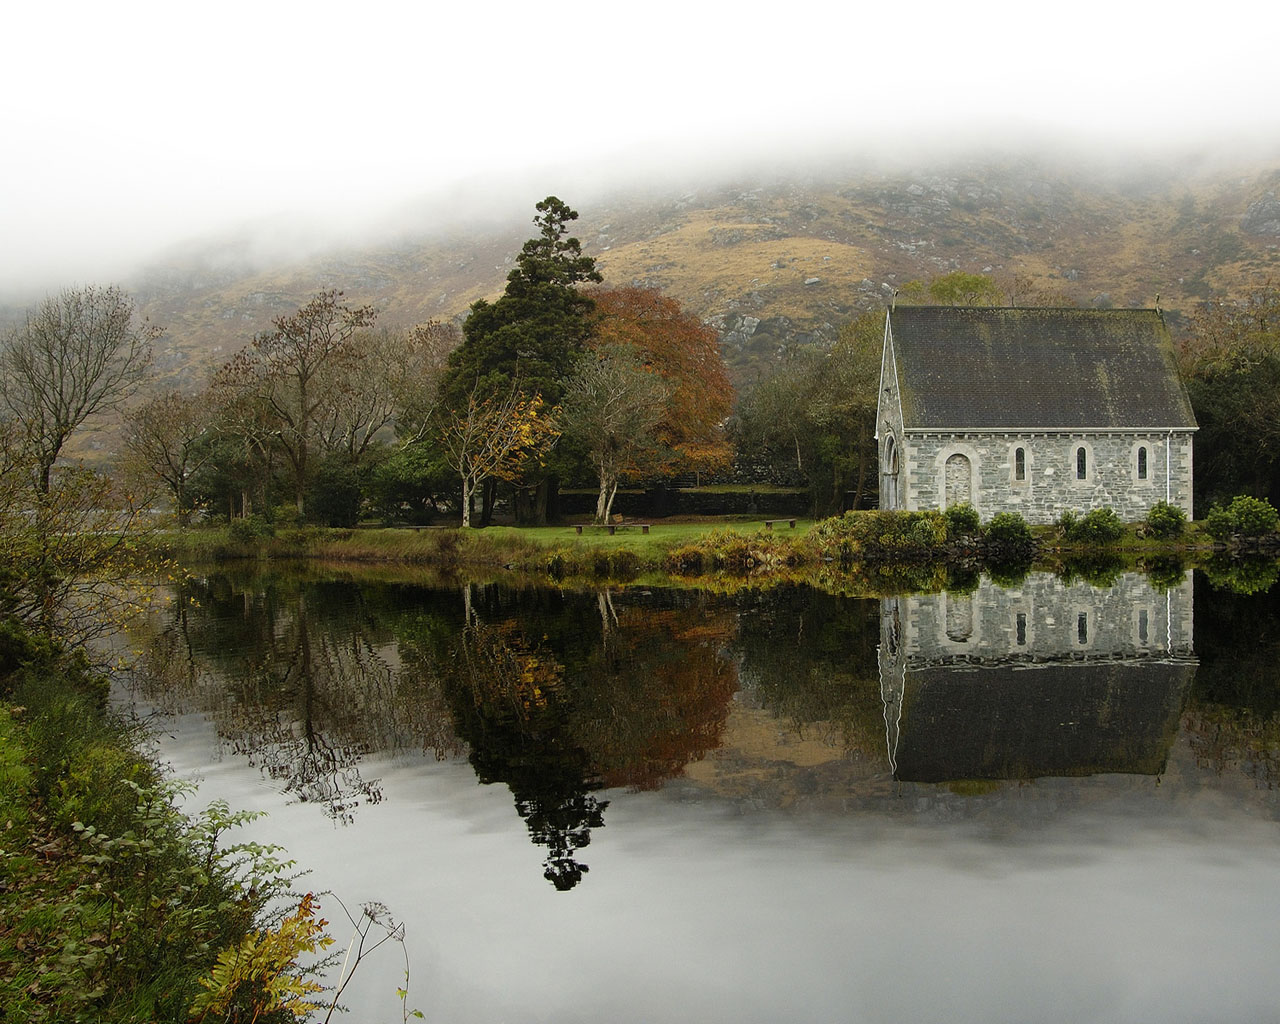 Gougane Barra is a settlement, west of Macroom in County Cork, Ireland.